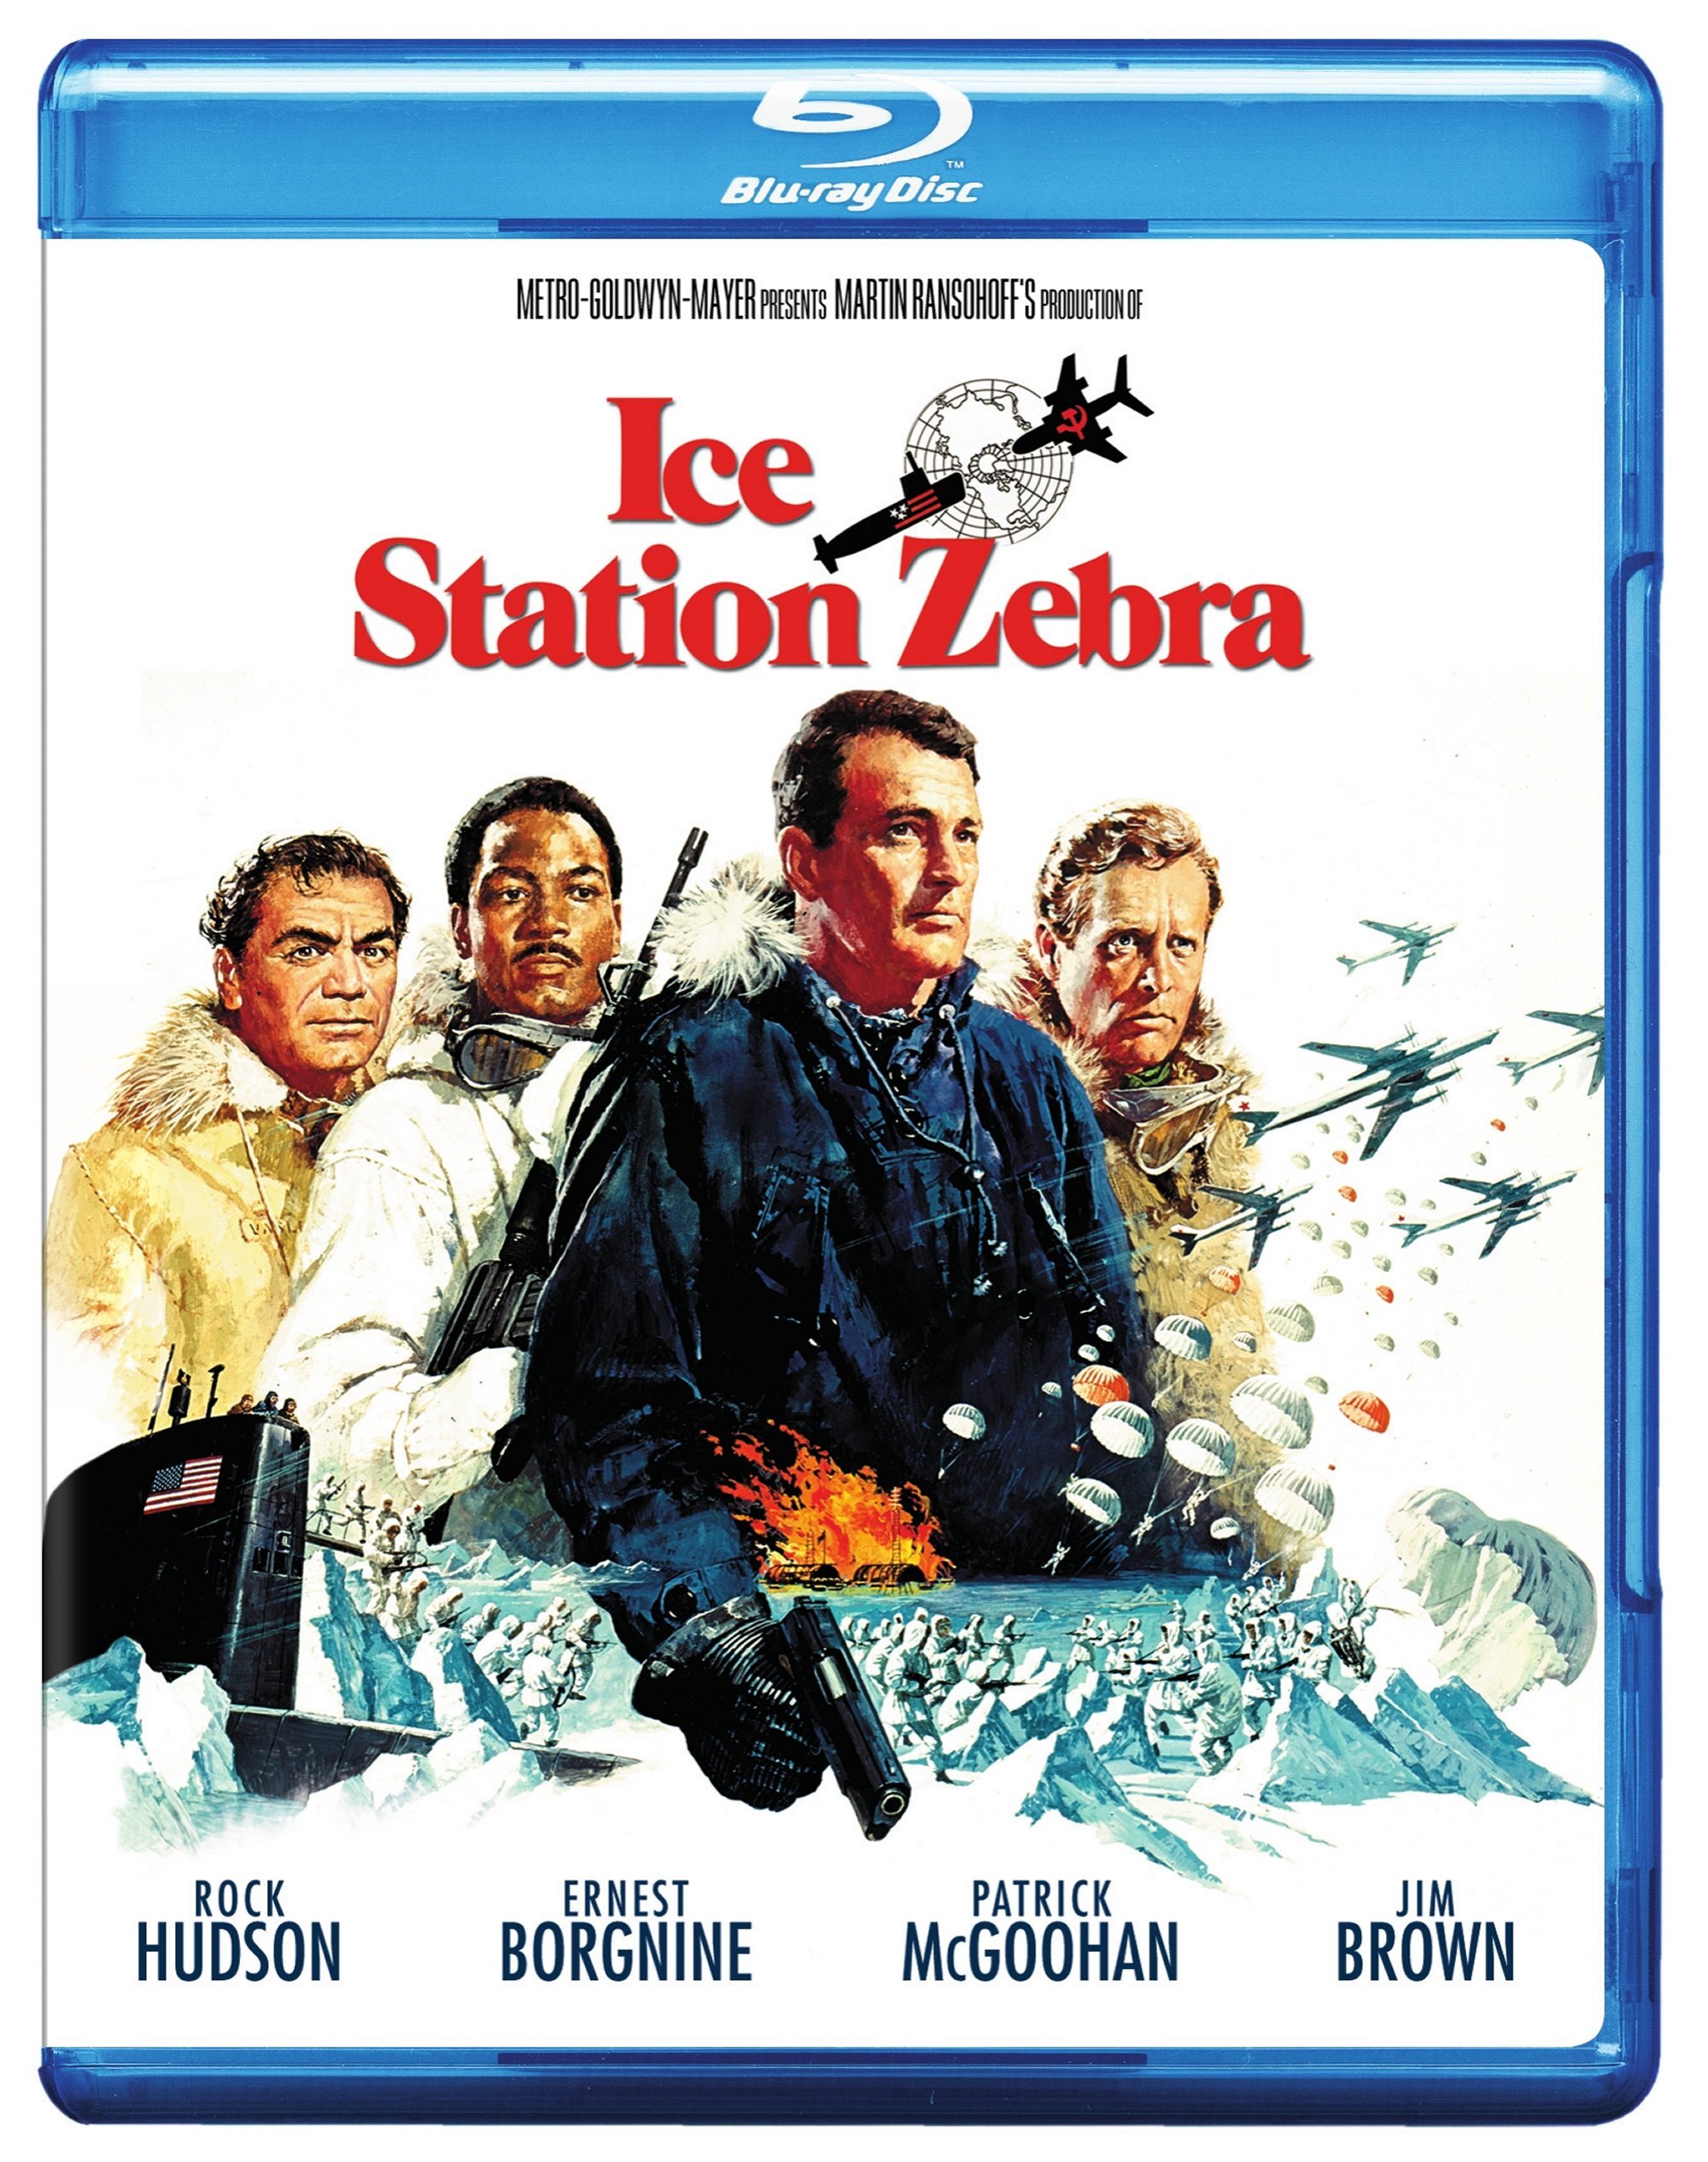 Ice Station Zebra - Blu-ray [ 1968 ]  - Modern Classic Movies On Blu-ray - Movies On GRUV